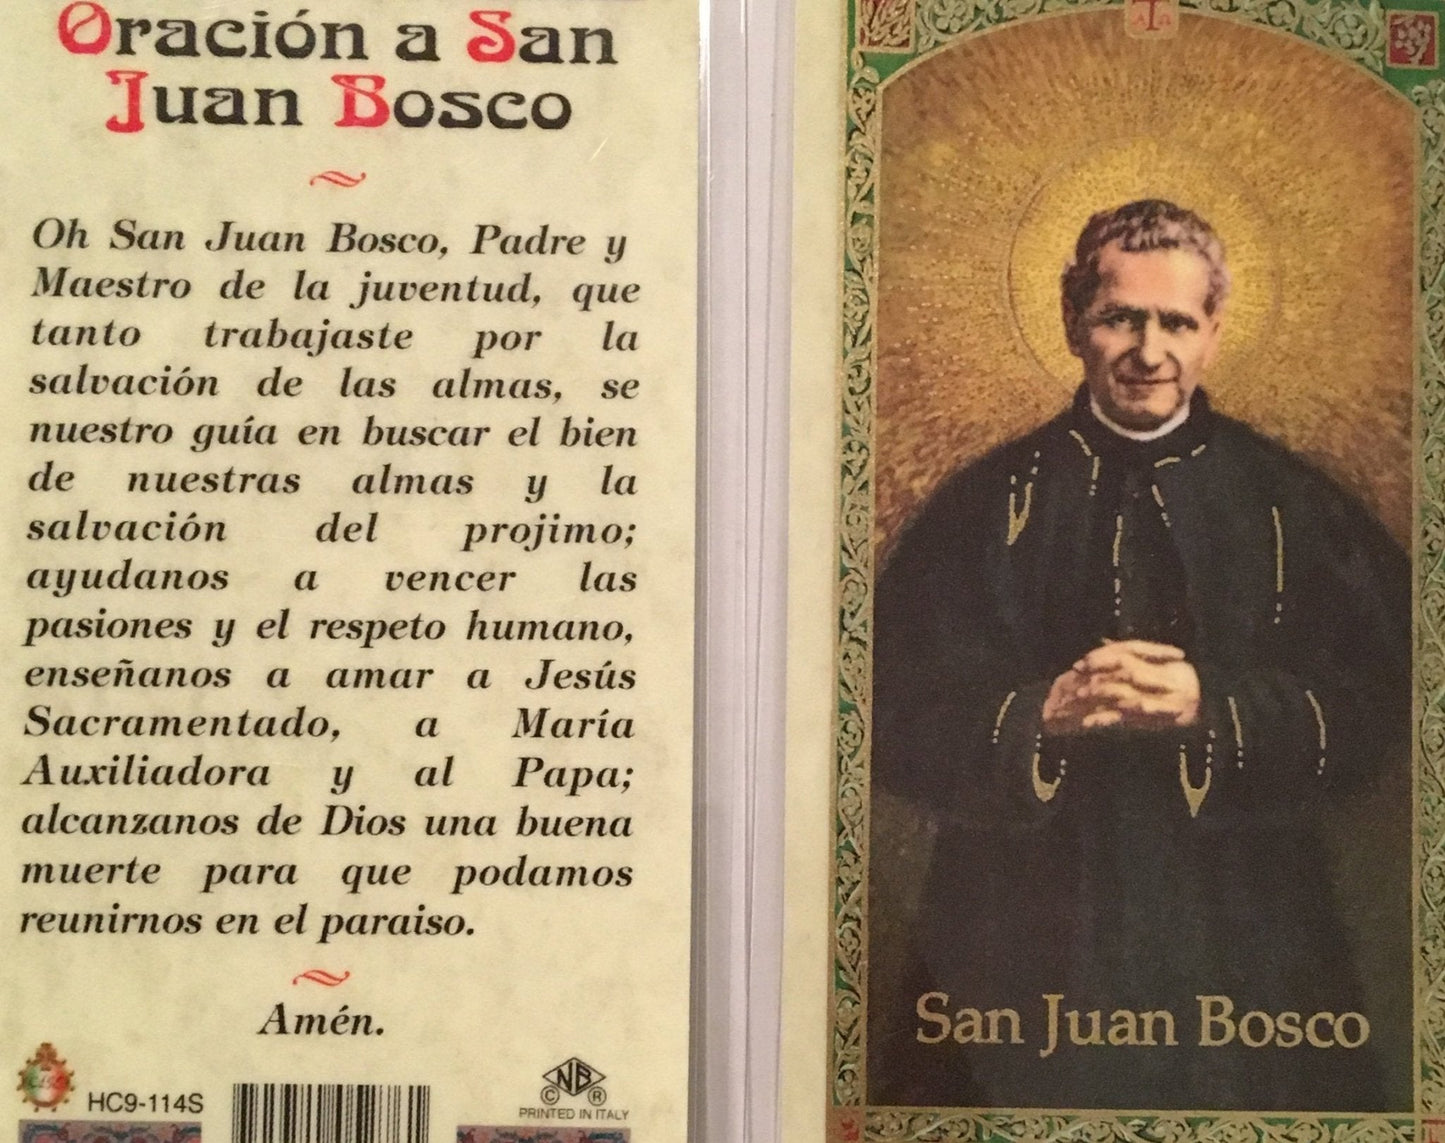 Prayer Card Oracion A San Juan Bosco SPANISH Laminated HC9-114S - Ysleta Mission Gift Shop- VOTED El Paso's Best Gift Shop